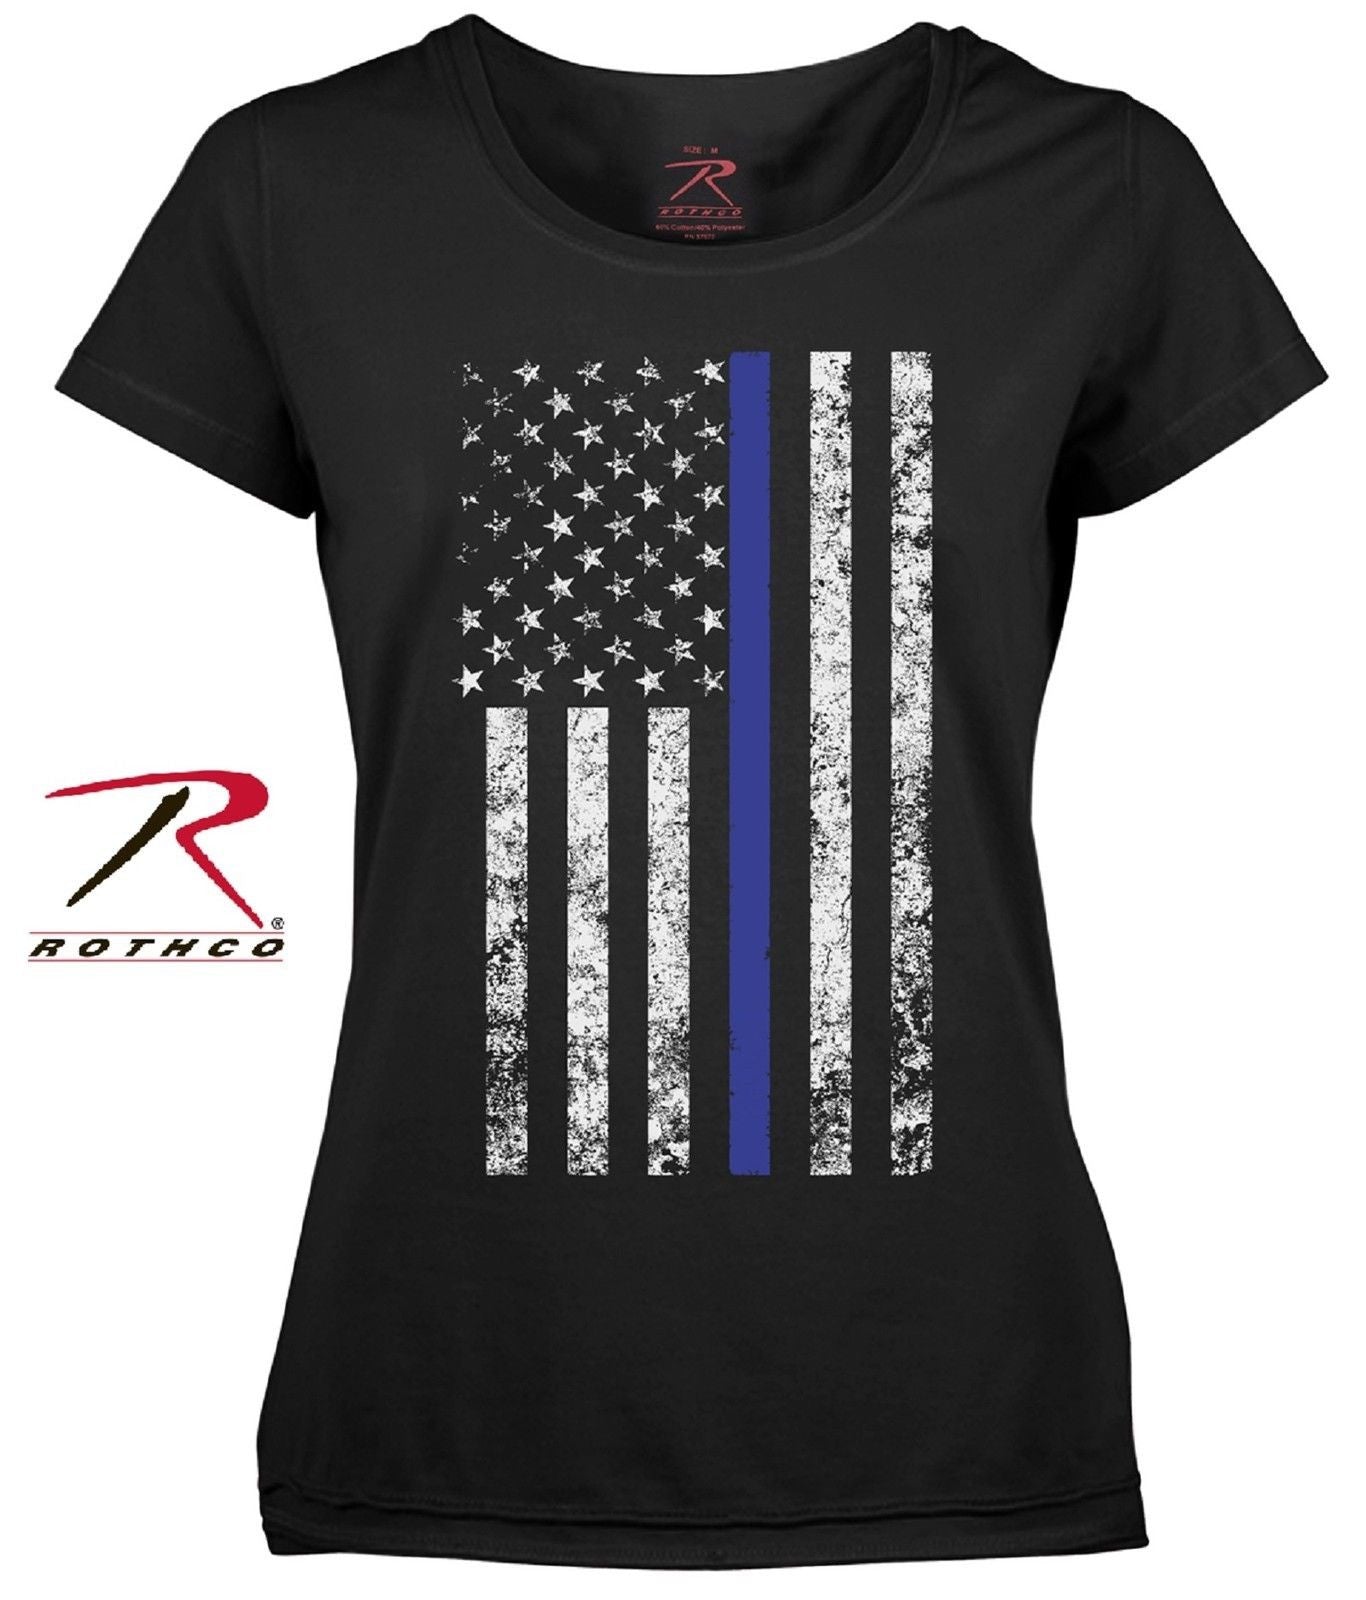 Womens Thin Blue Line Fatigued American Flag Tee Shirt Black Tbl Gir Grunt Force